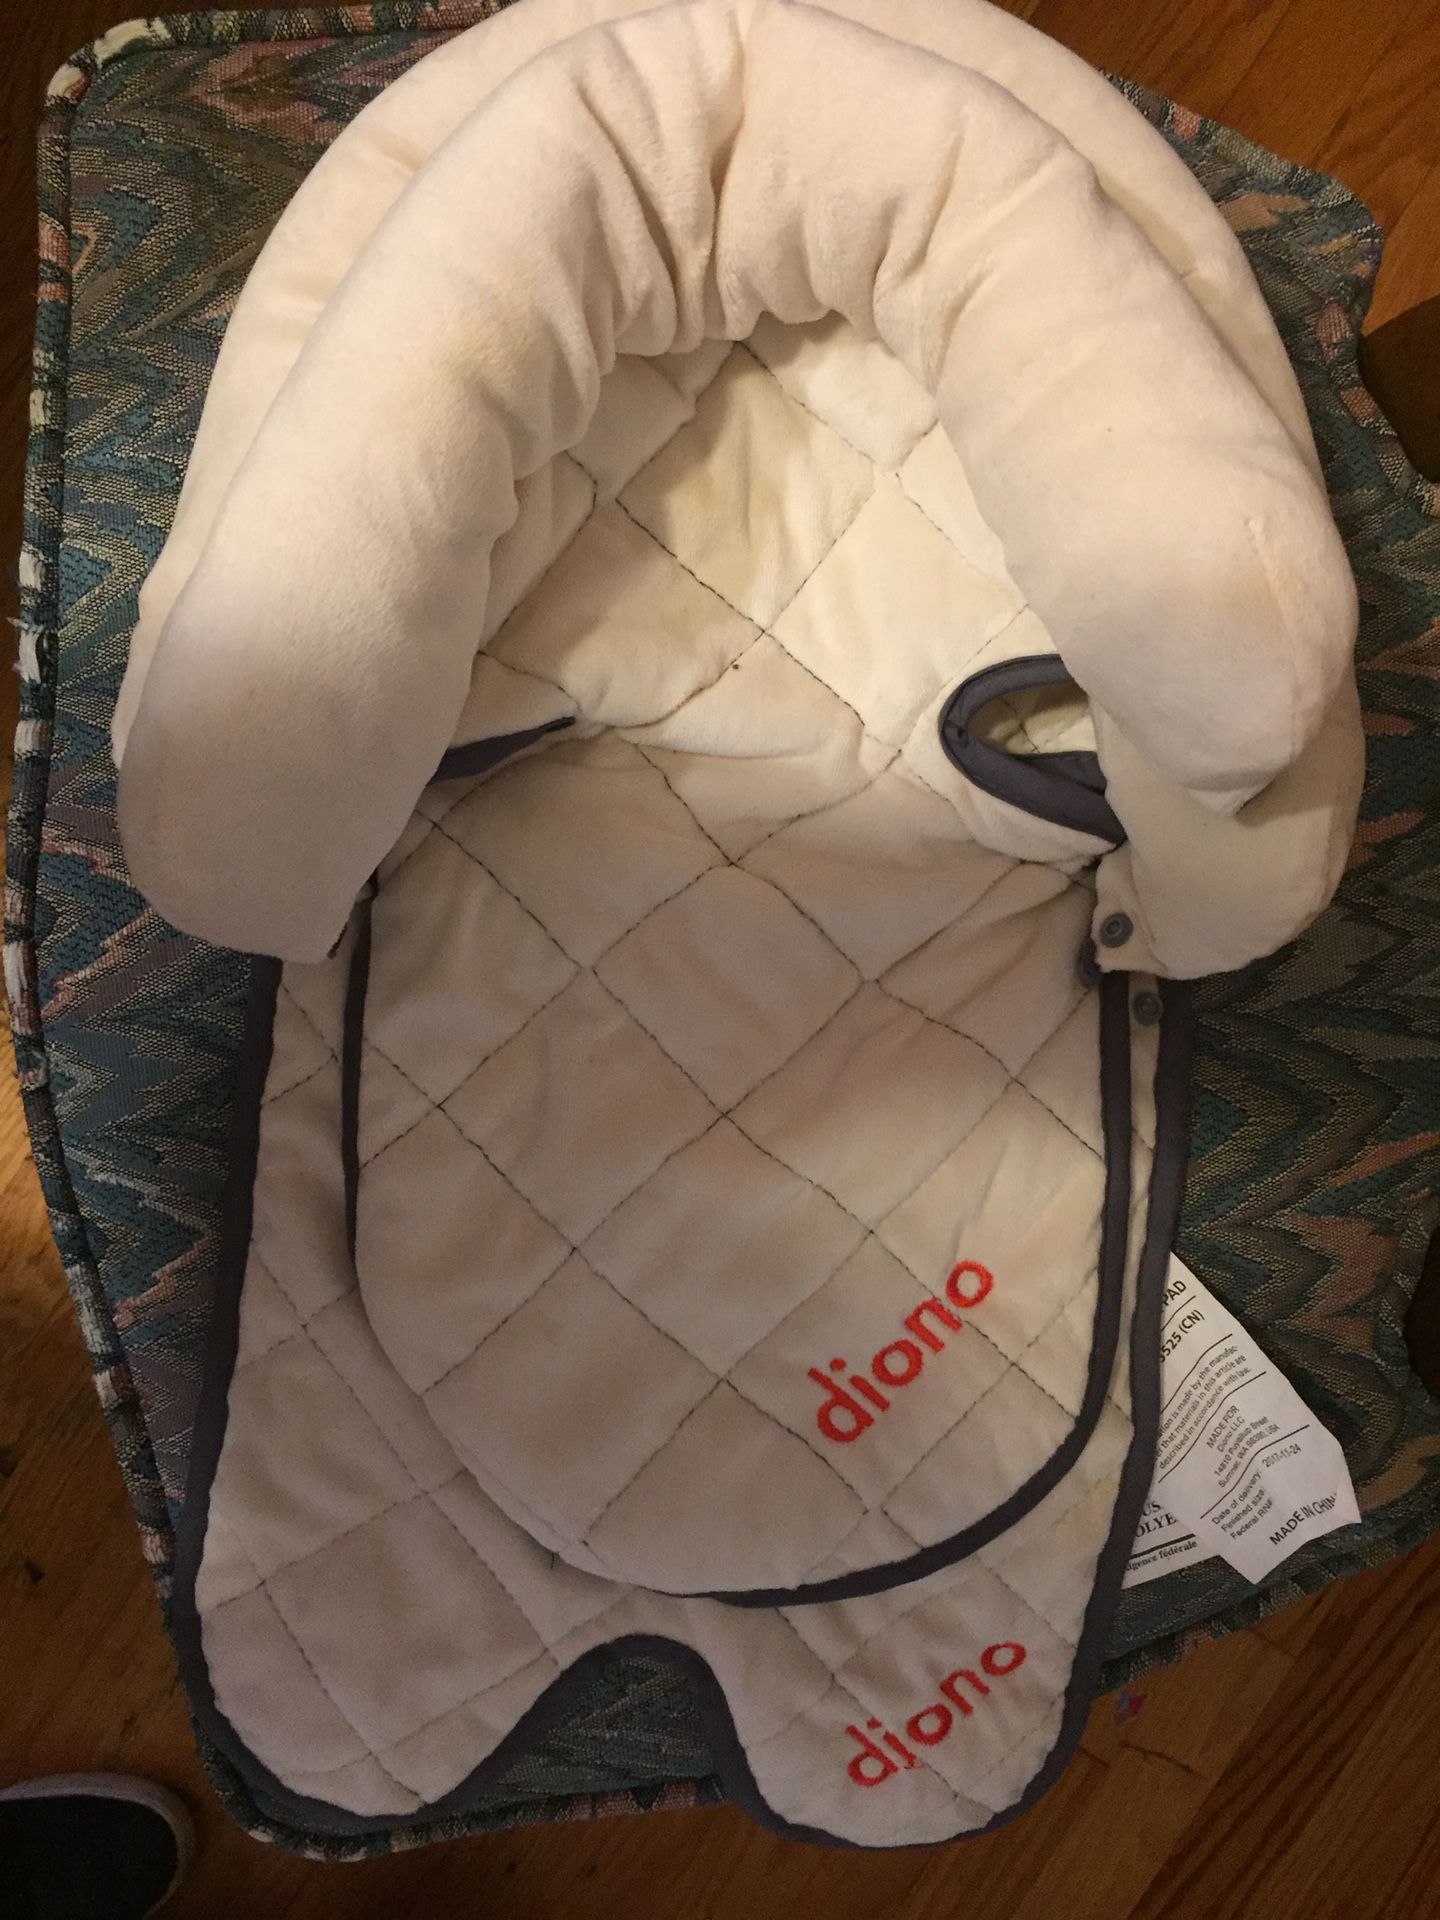 Diono infant car seat insert